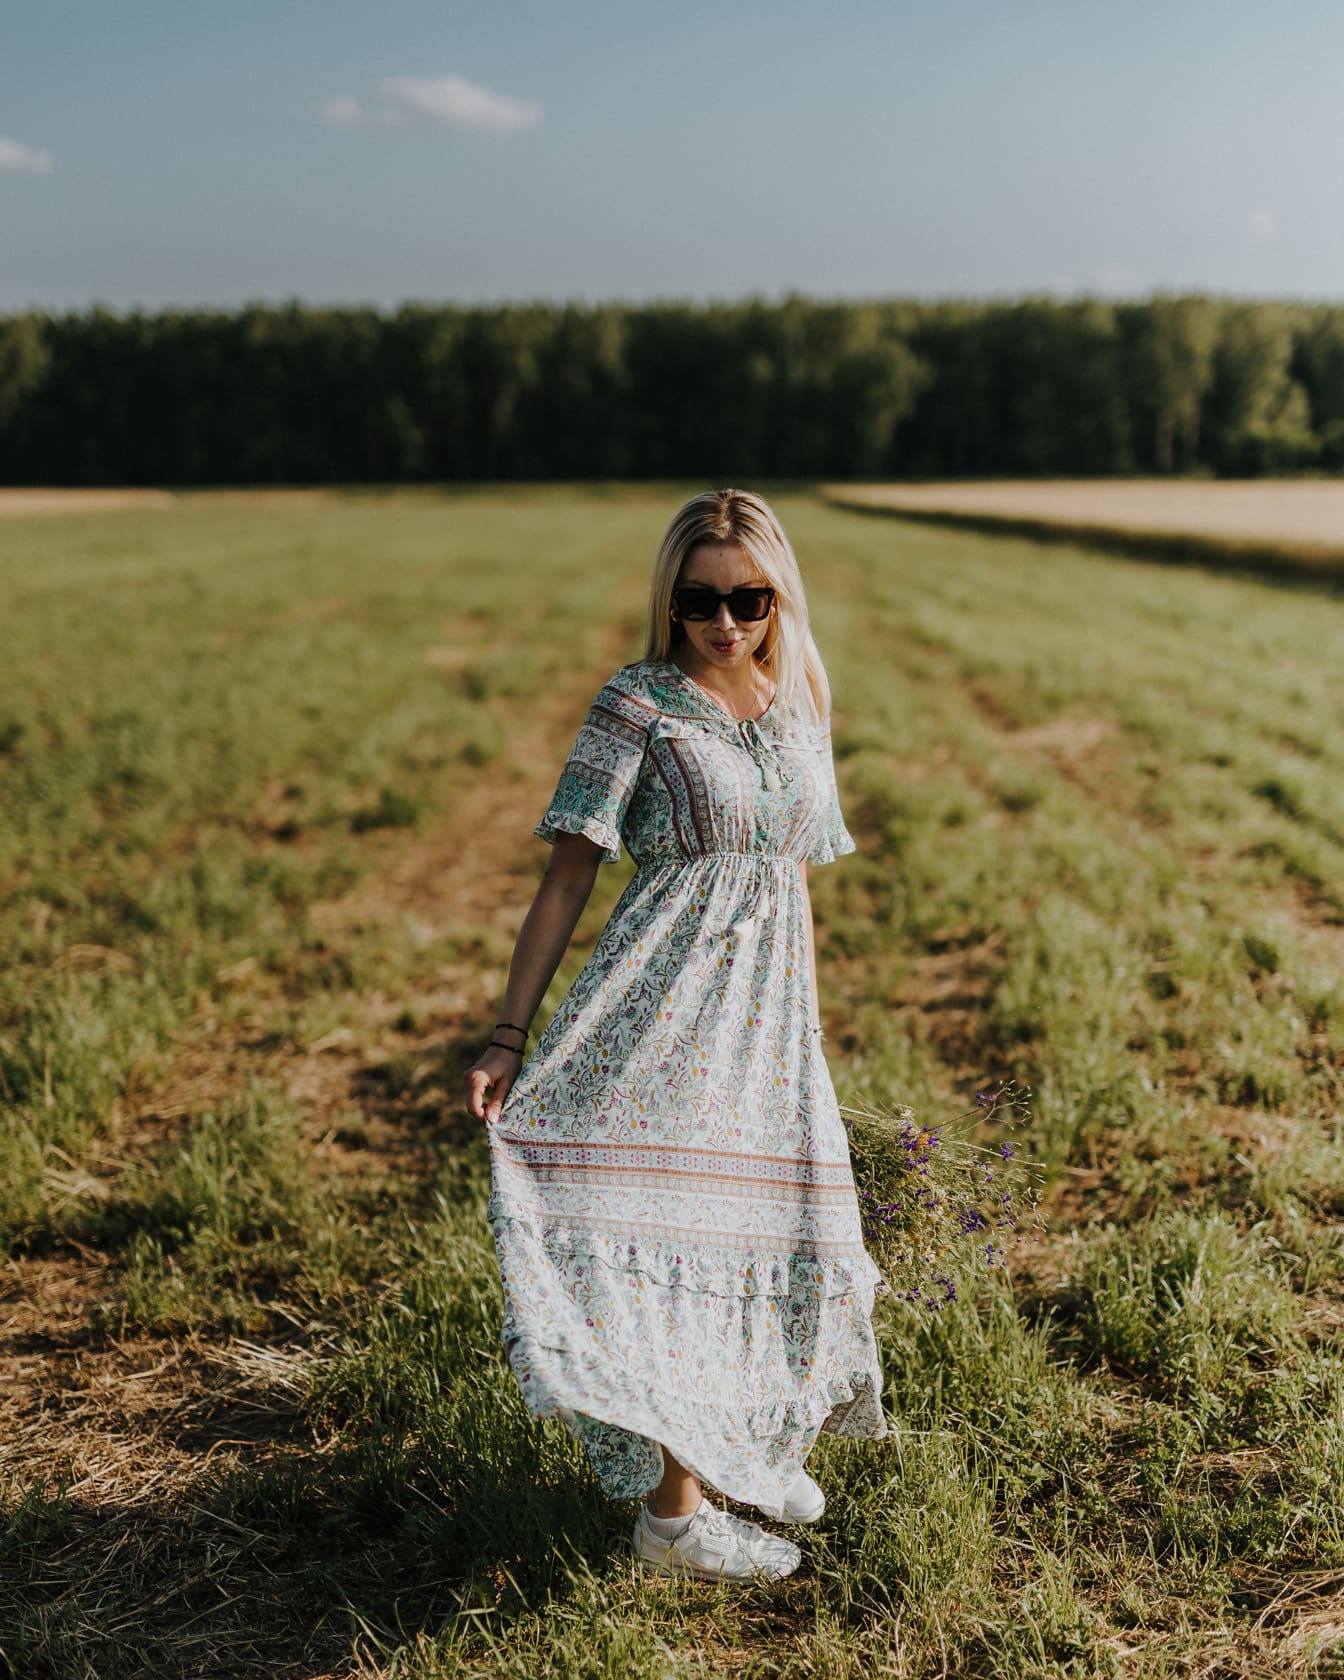 Junge Frau trägt ausgefallenes Blumenkleid-Outfit auf dem Feld